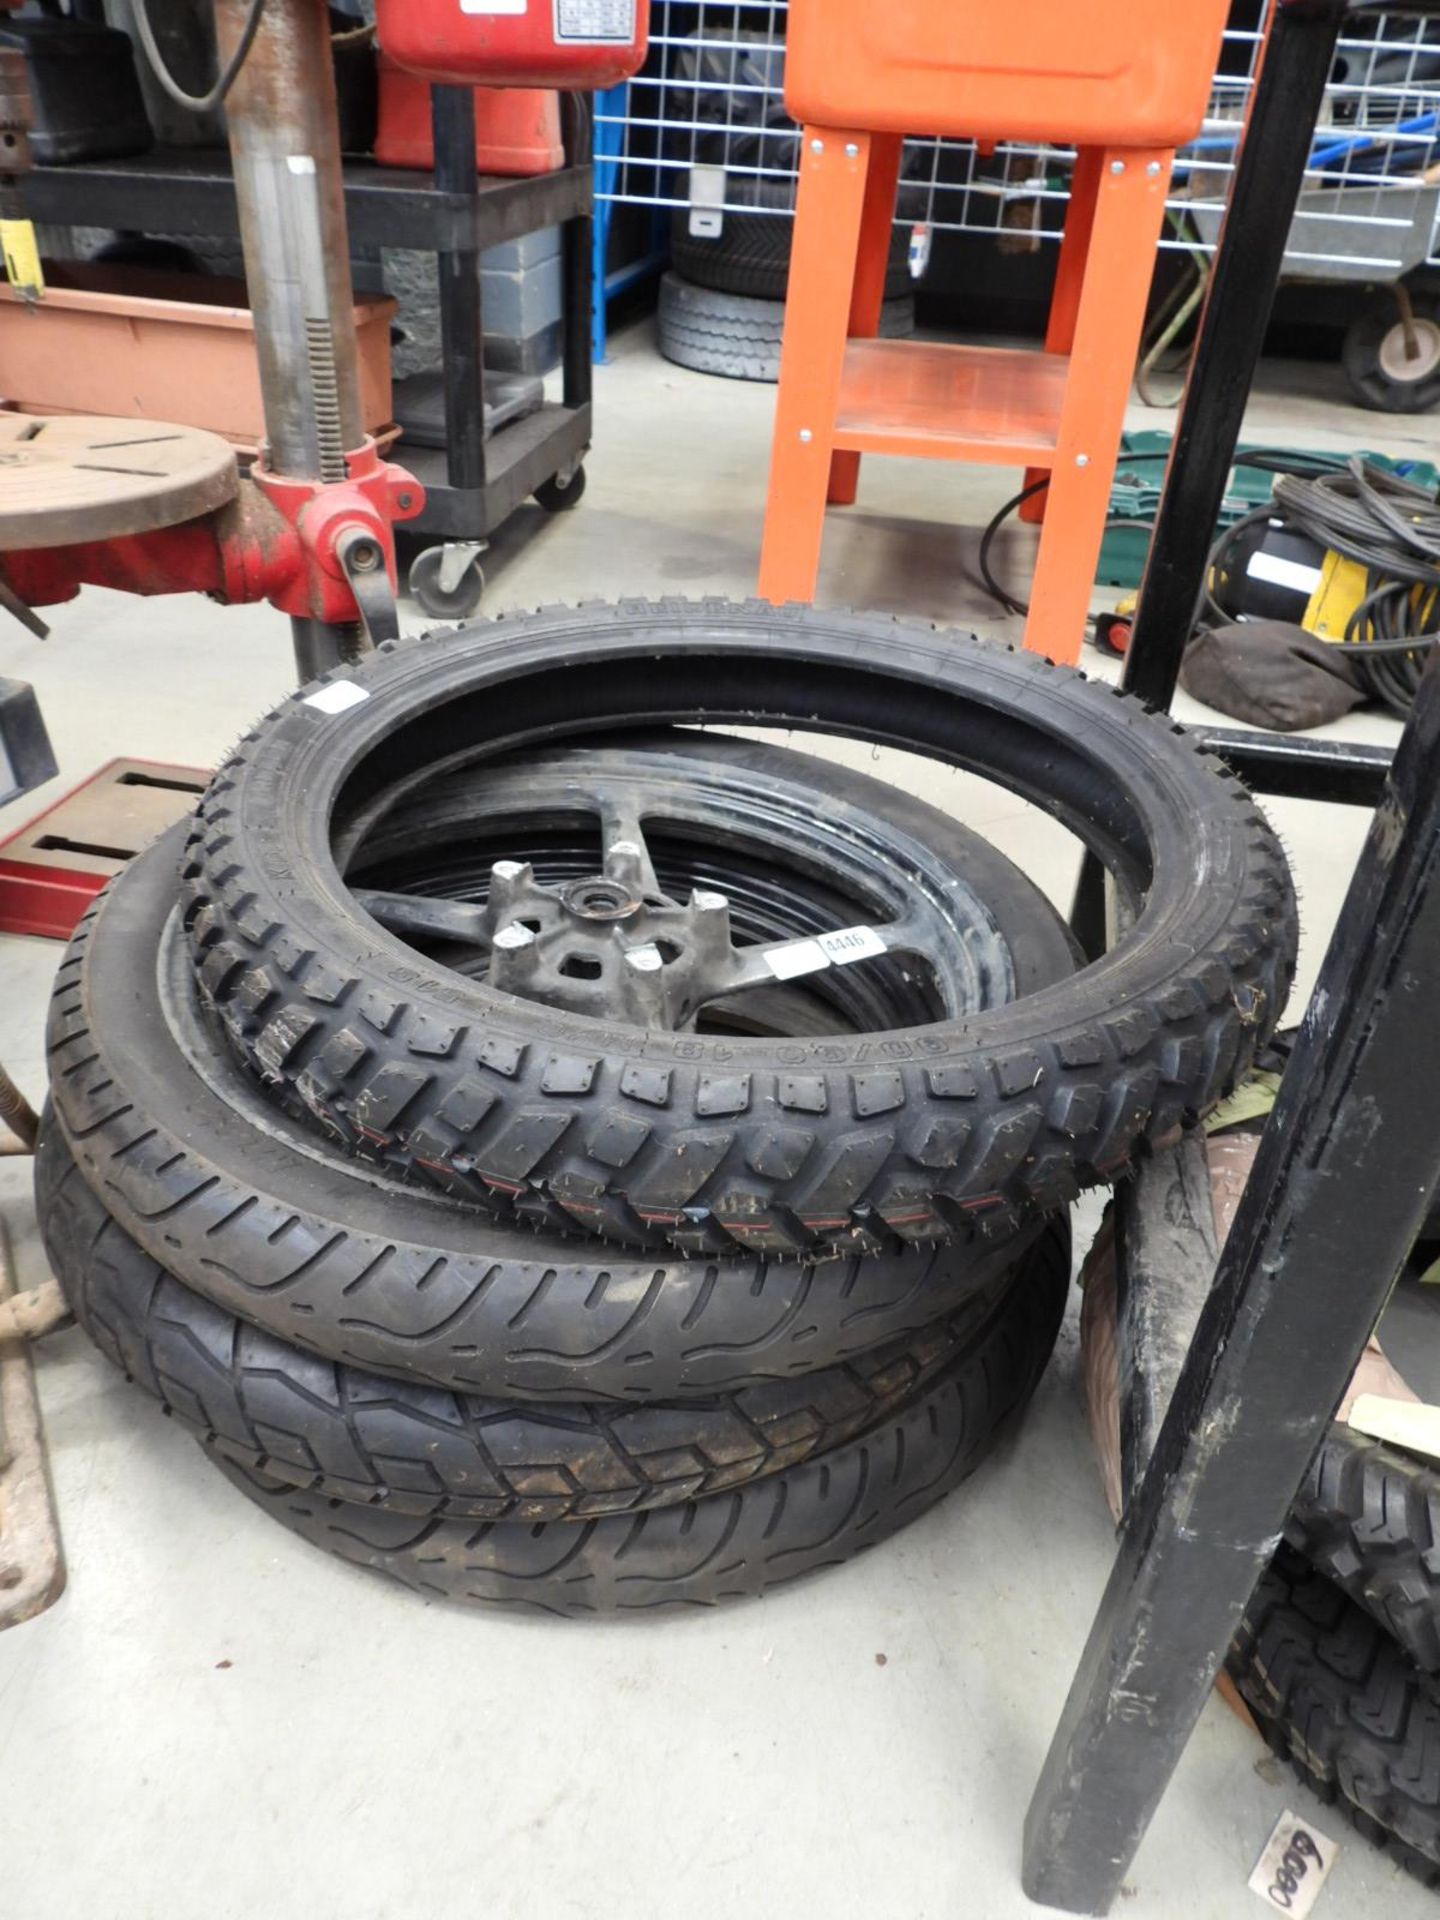 4345 - 2 motorbike wheels and 3 tyres